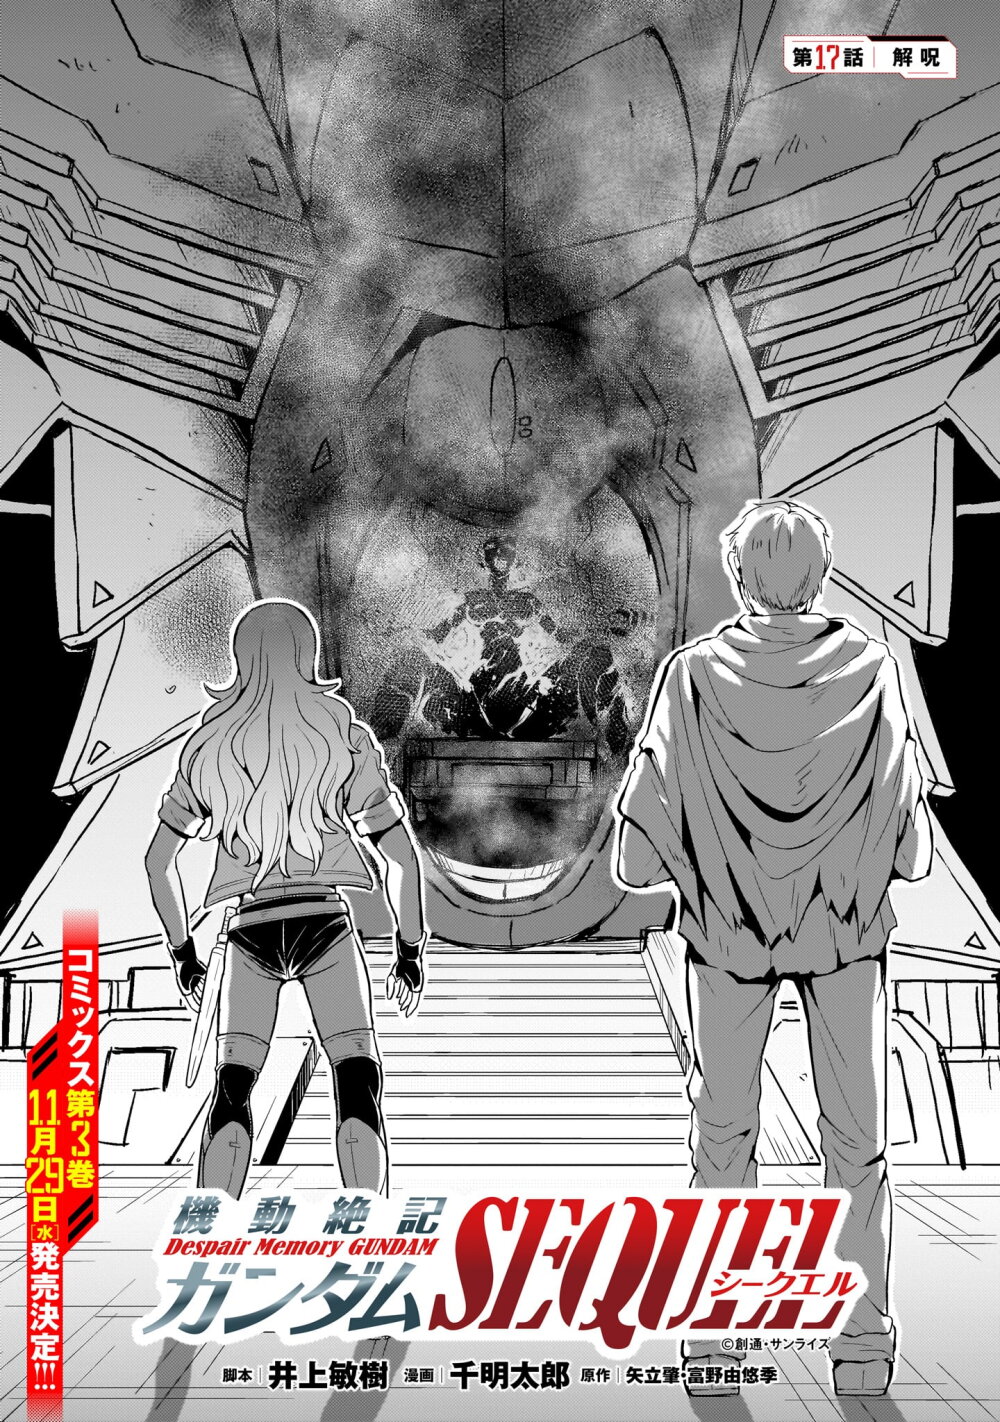 Despair Memory Gundam Sequel 17 01